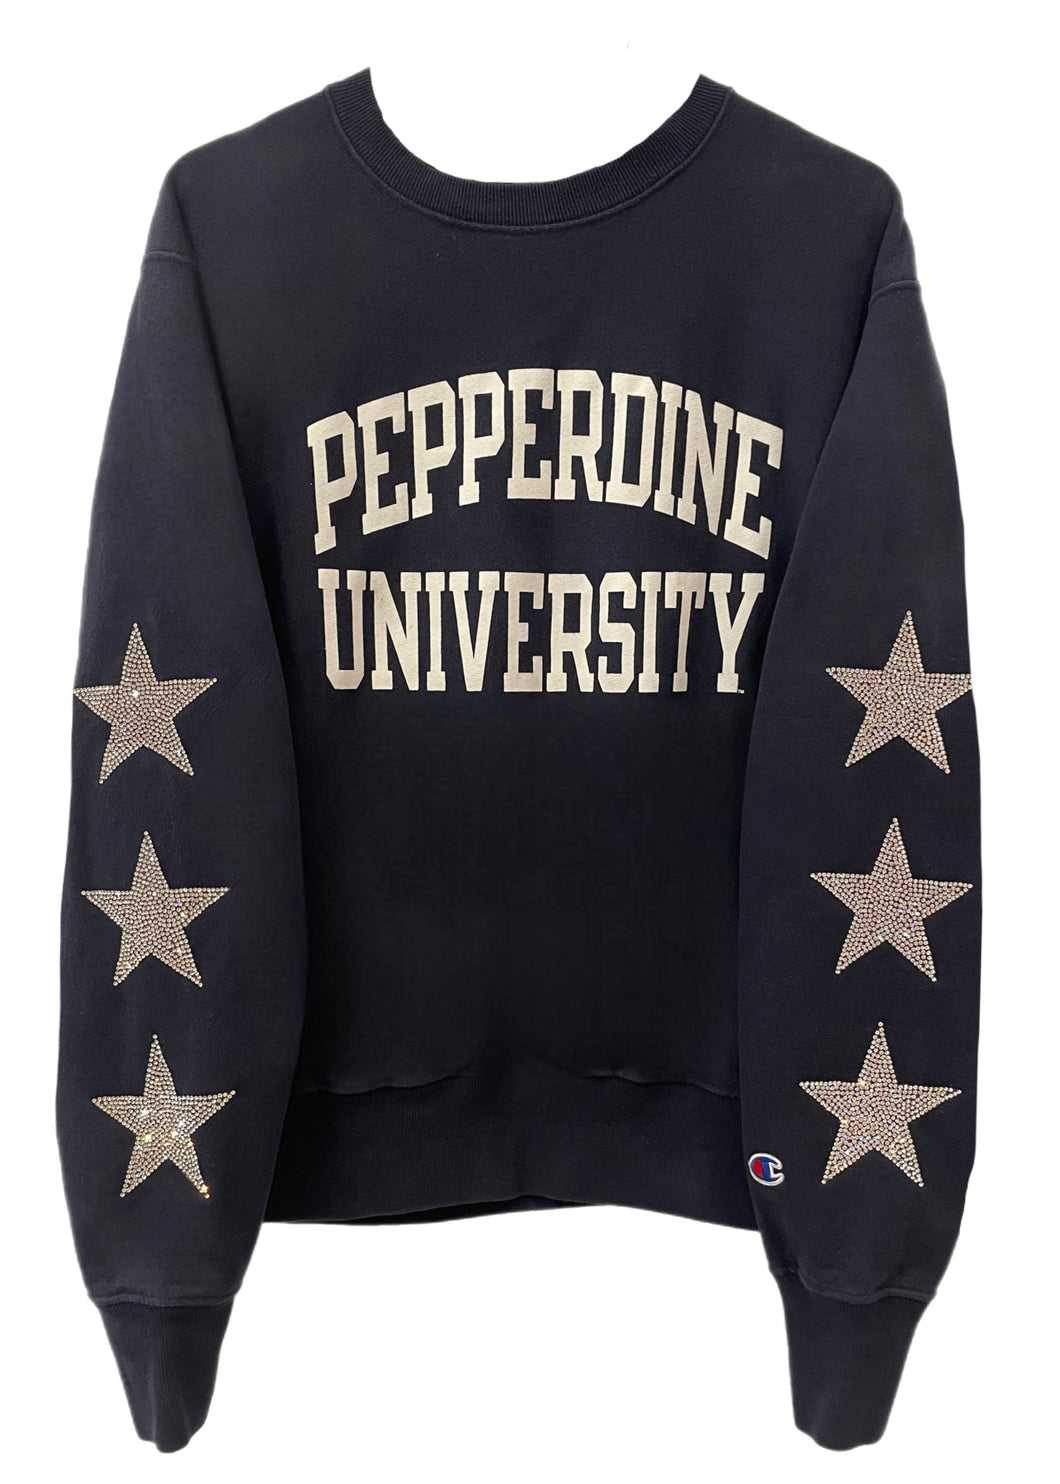 Pepperdine University, One of a KIND Vintage Sweatshirt with Three Crystal Star Design